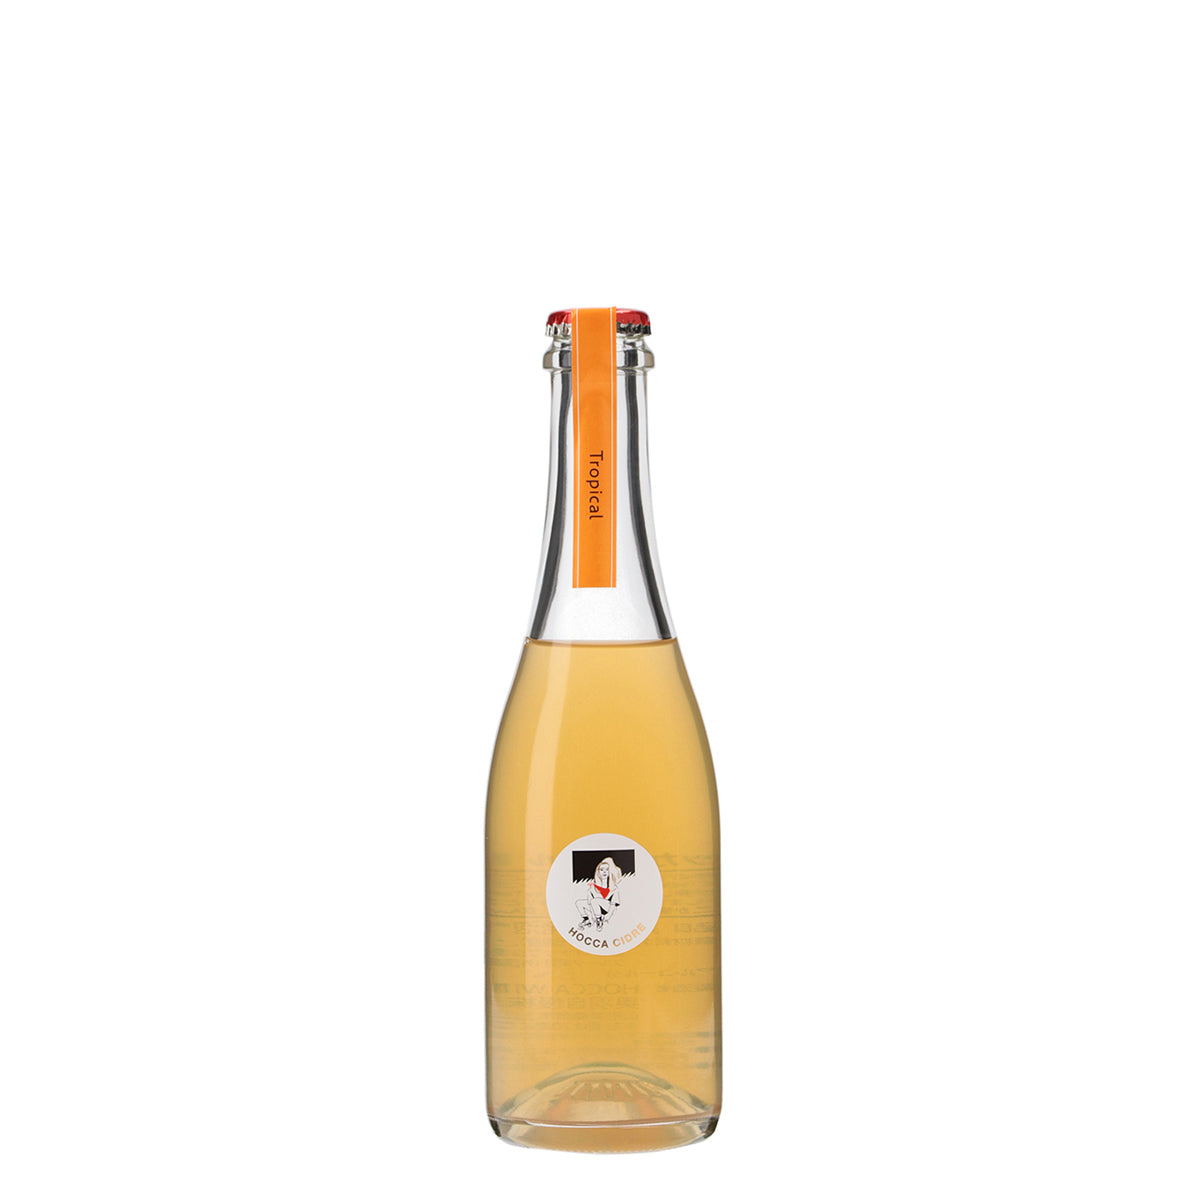 HOCCA Cidre Tropical［350ml］ /HOCCA WINERY /シードル /甘口 /350ml – wa-syu  /日本ワイン限定通販